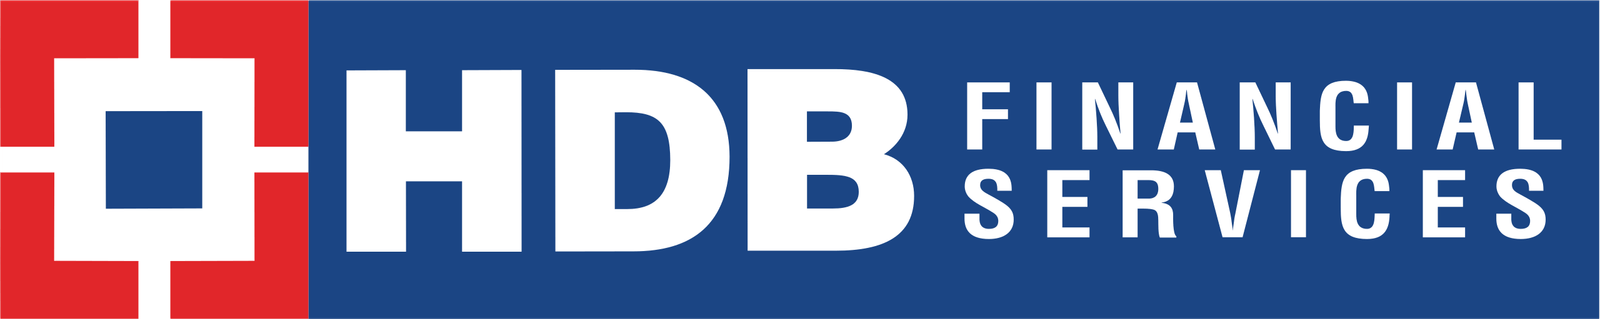 HDB Financial Services logo.svg